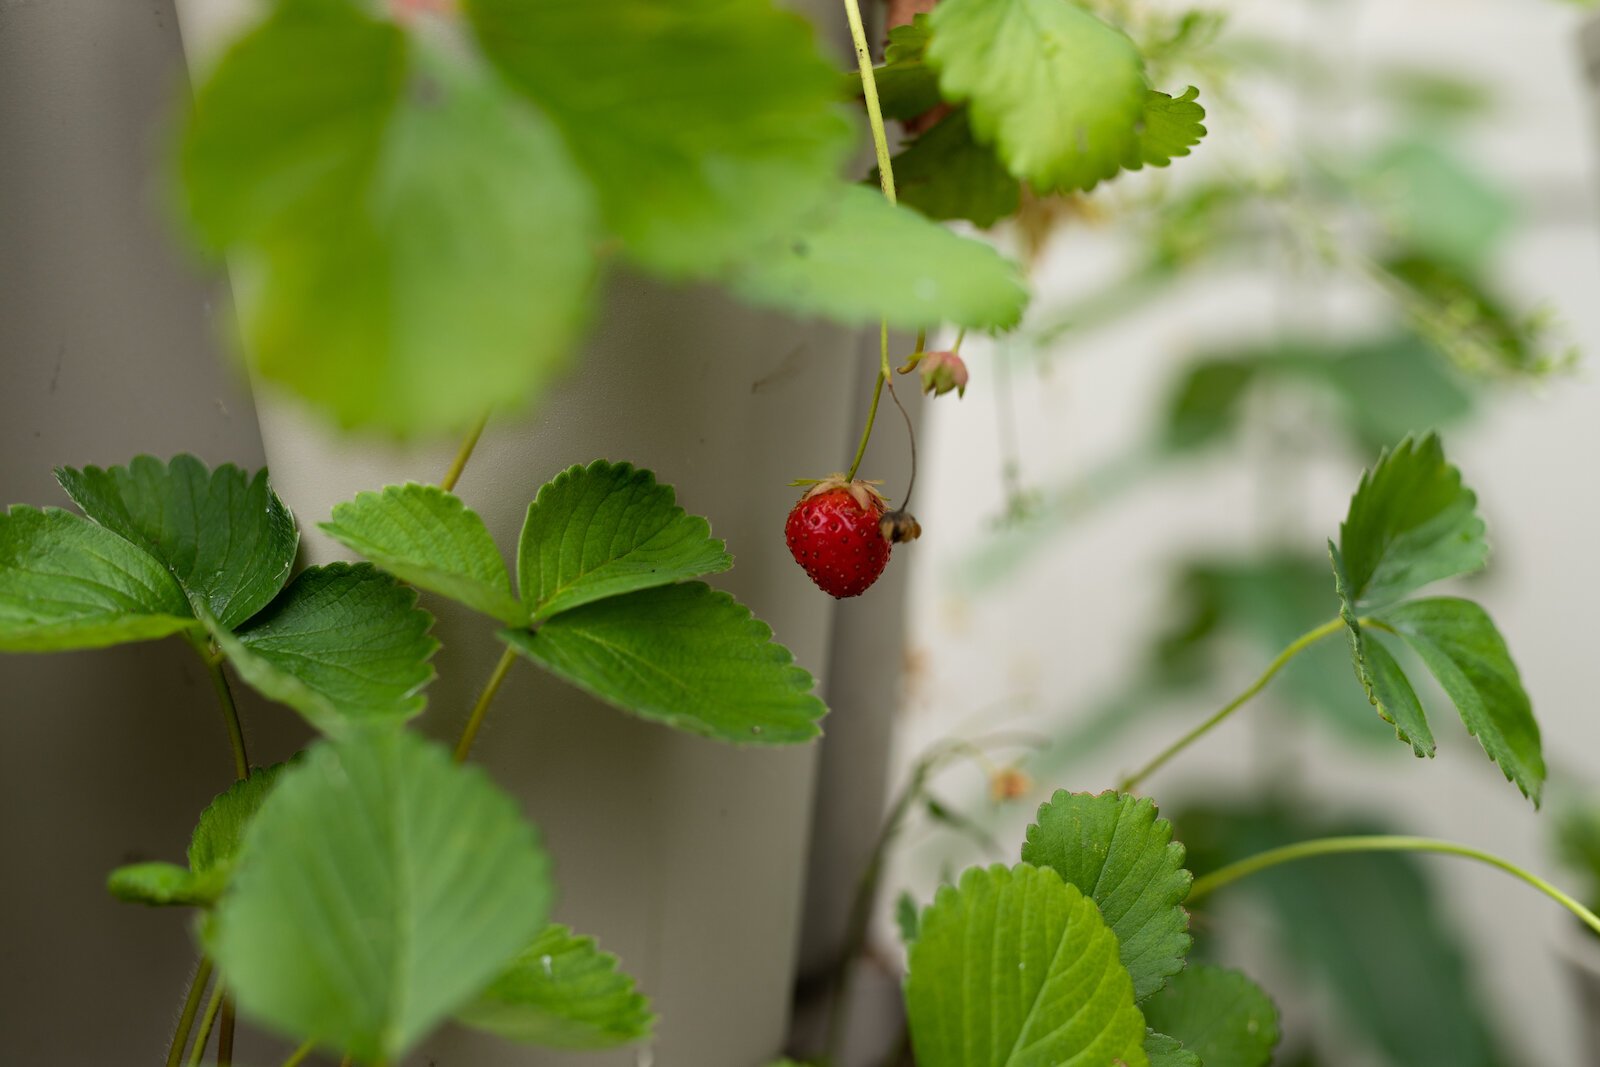 Hydroponic Strawberries at Poplar Village Gardens.